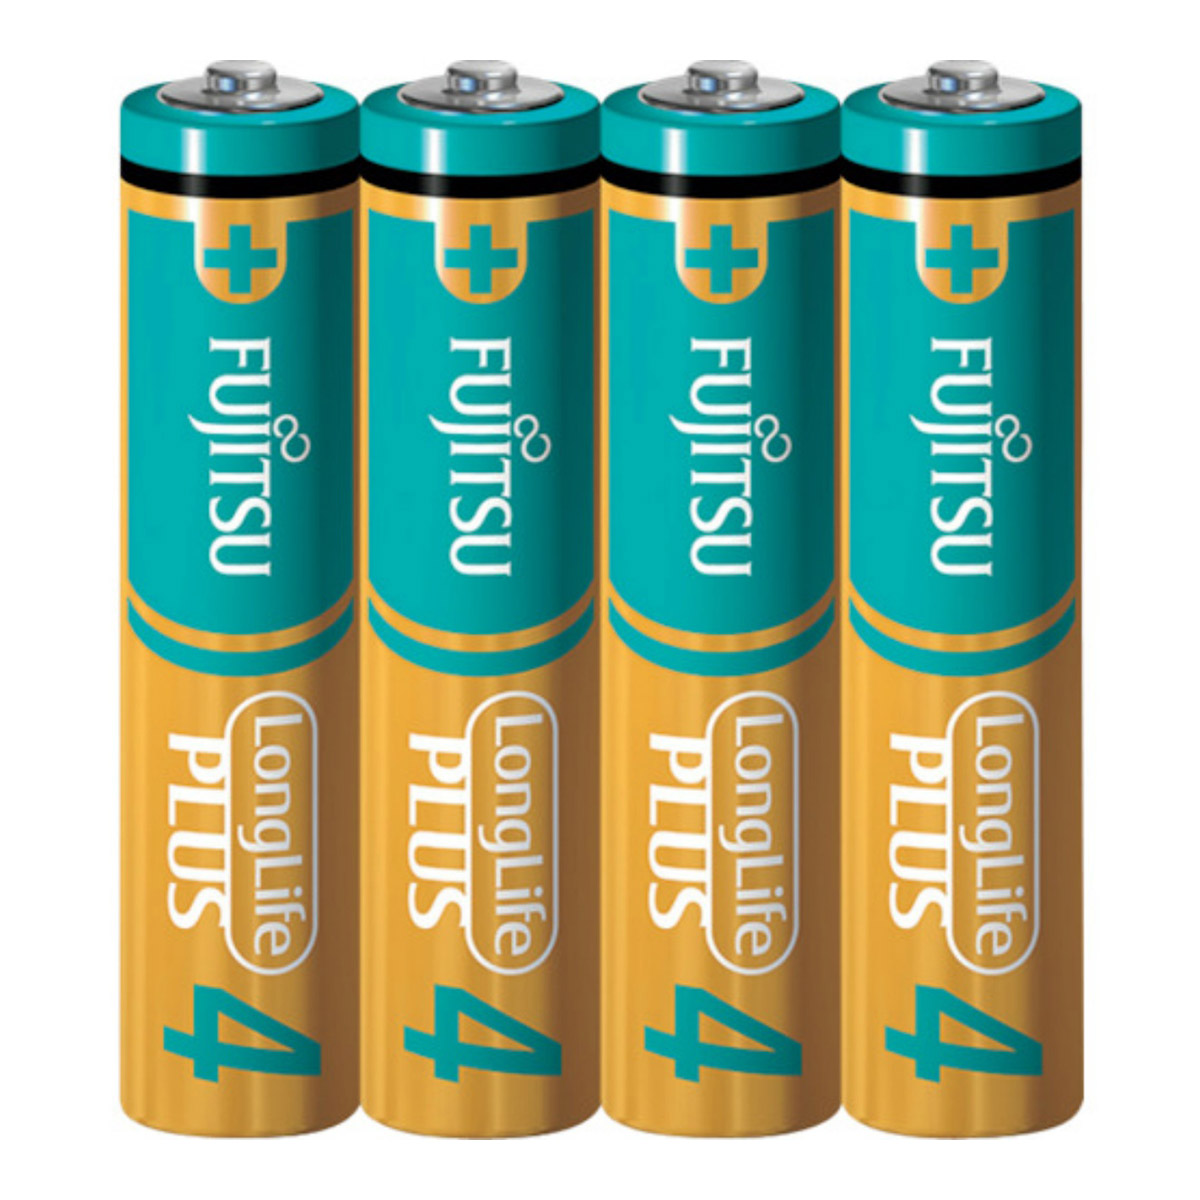 FDK FUJITSU PremiumS アルカリ乾電池 サスティナパック 単4形 8個パック LR03PS 8SP 通販 